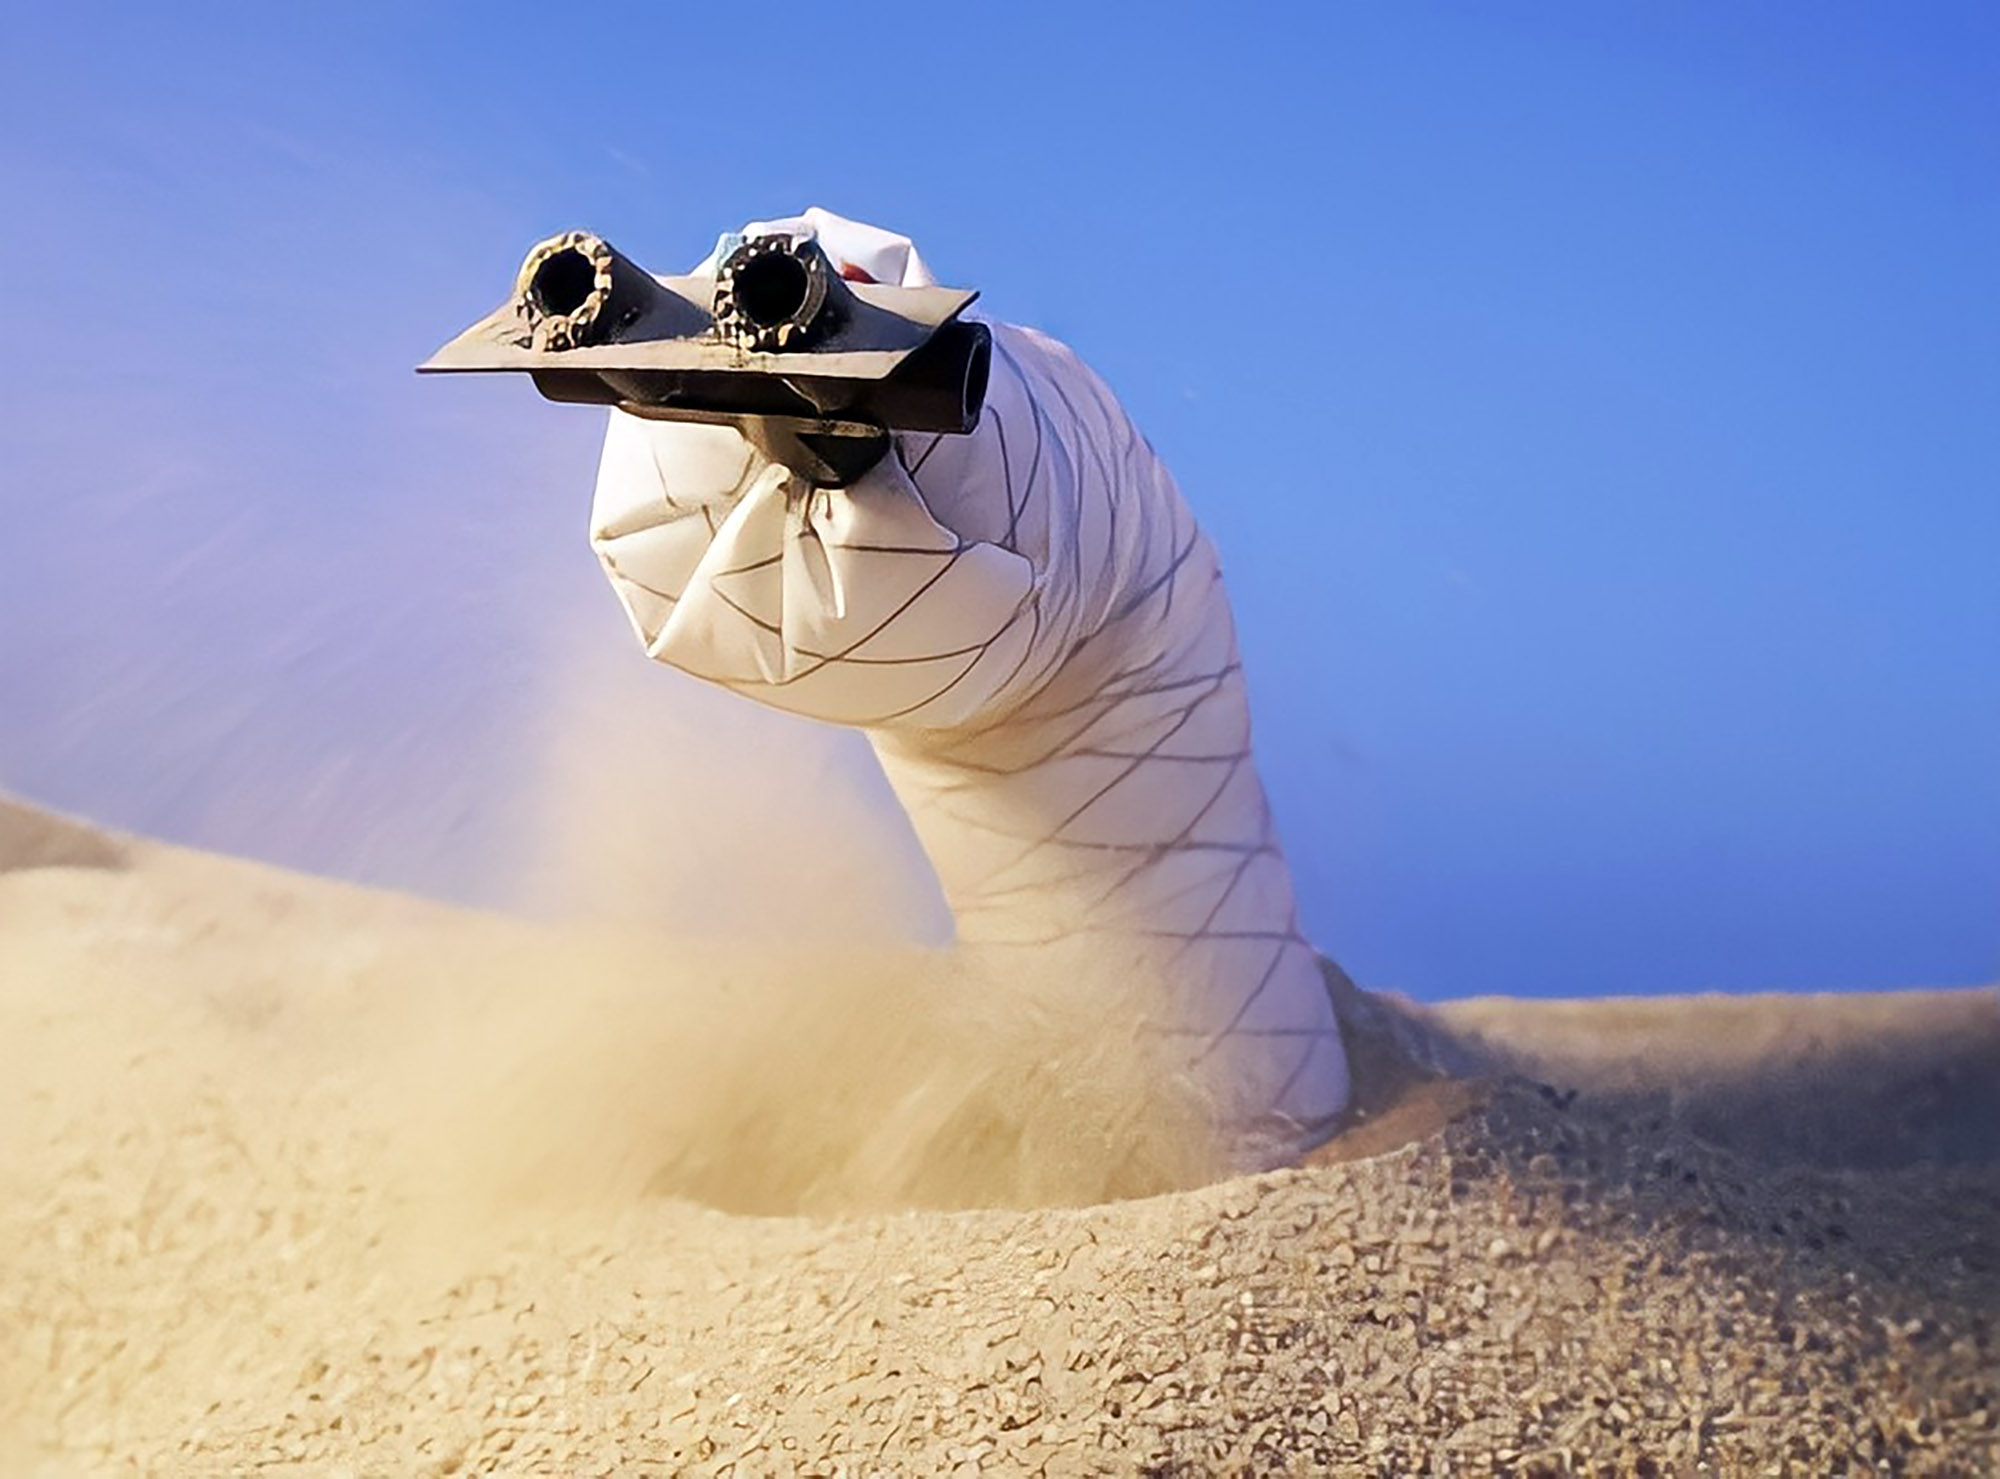 Terminator Meets Tremors: This Robo-Worm Swims Through Sand